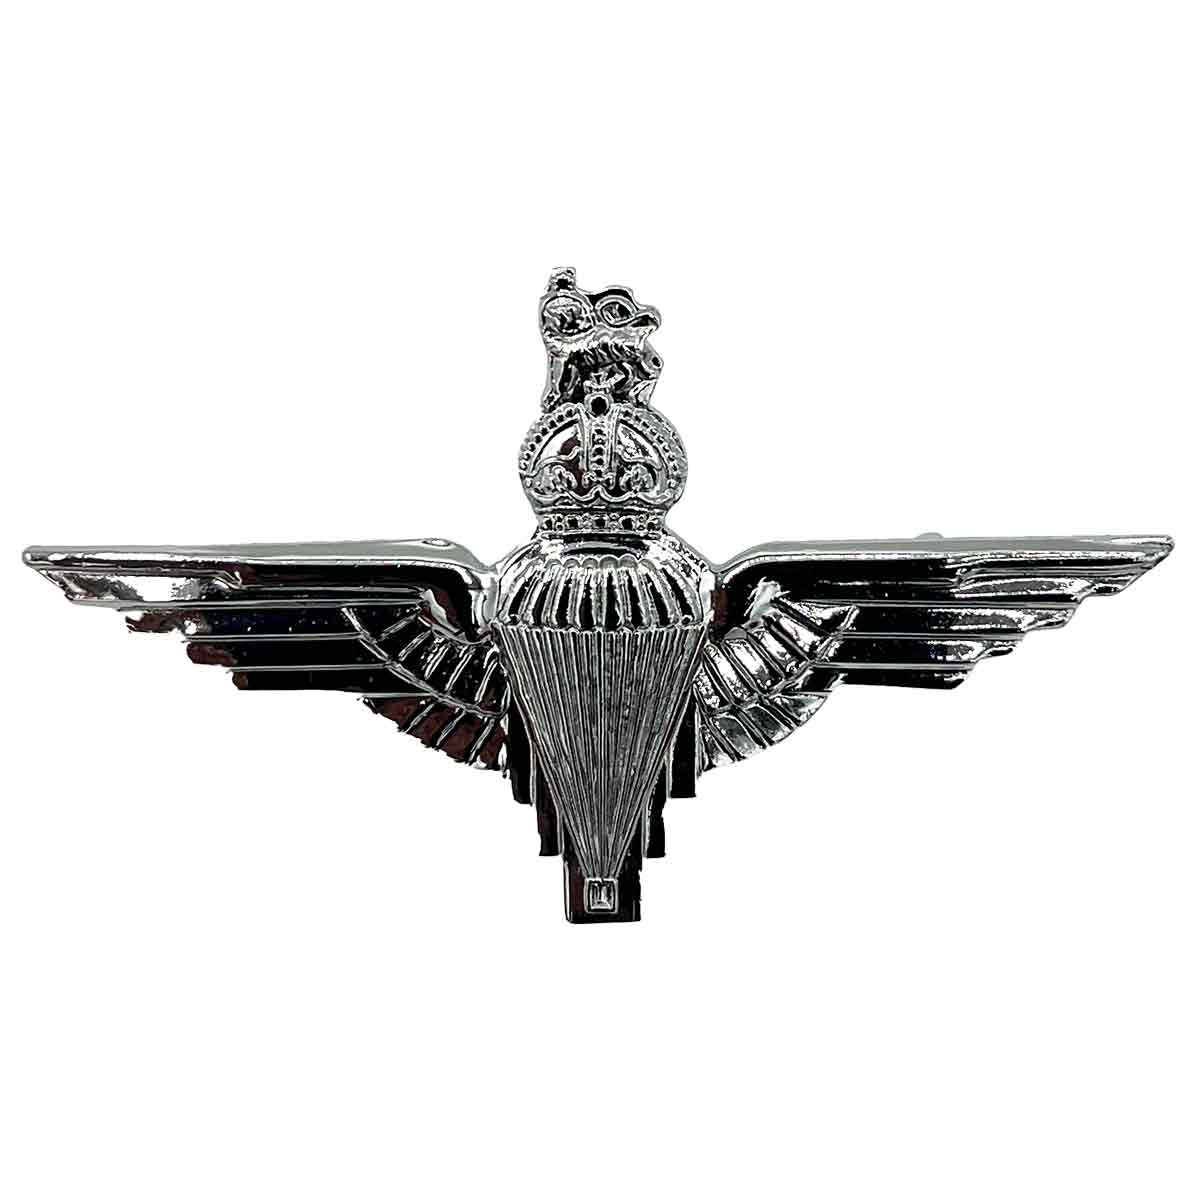 Parachute Regiment Beret Cap Badge with Kings Tudor Crown - John Bull Clothing